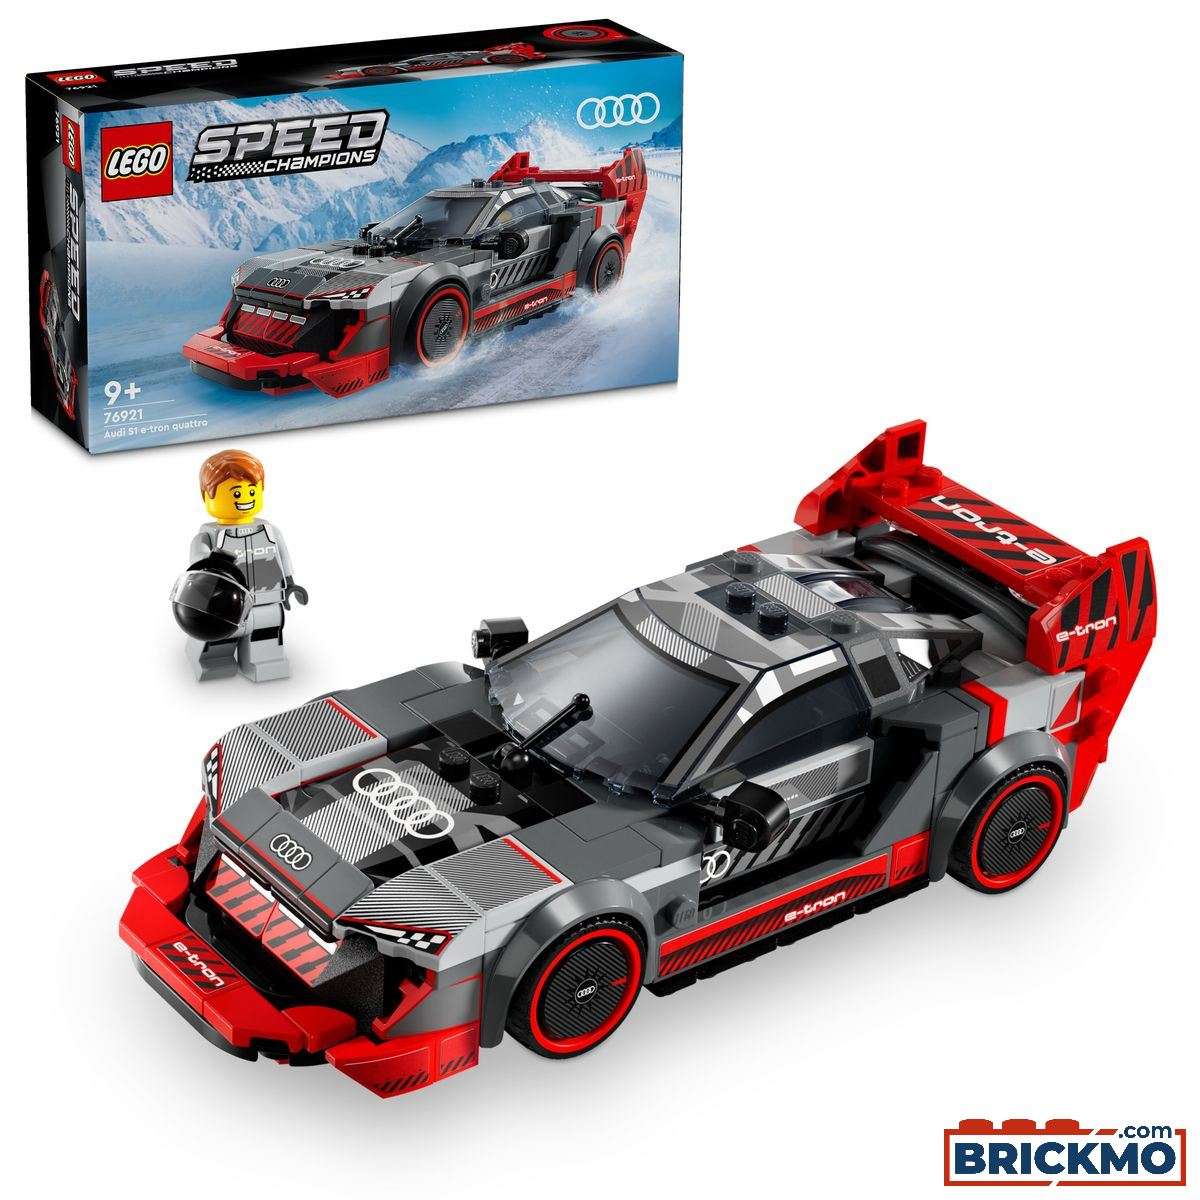 LEGO Speed Champions 76921 Audi S1 e-tron quattro versenyautó 76921